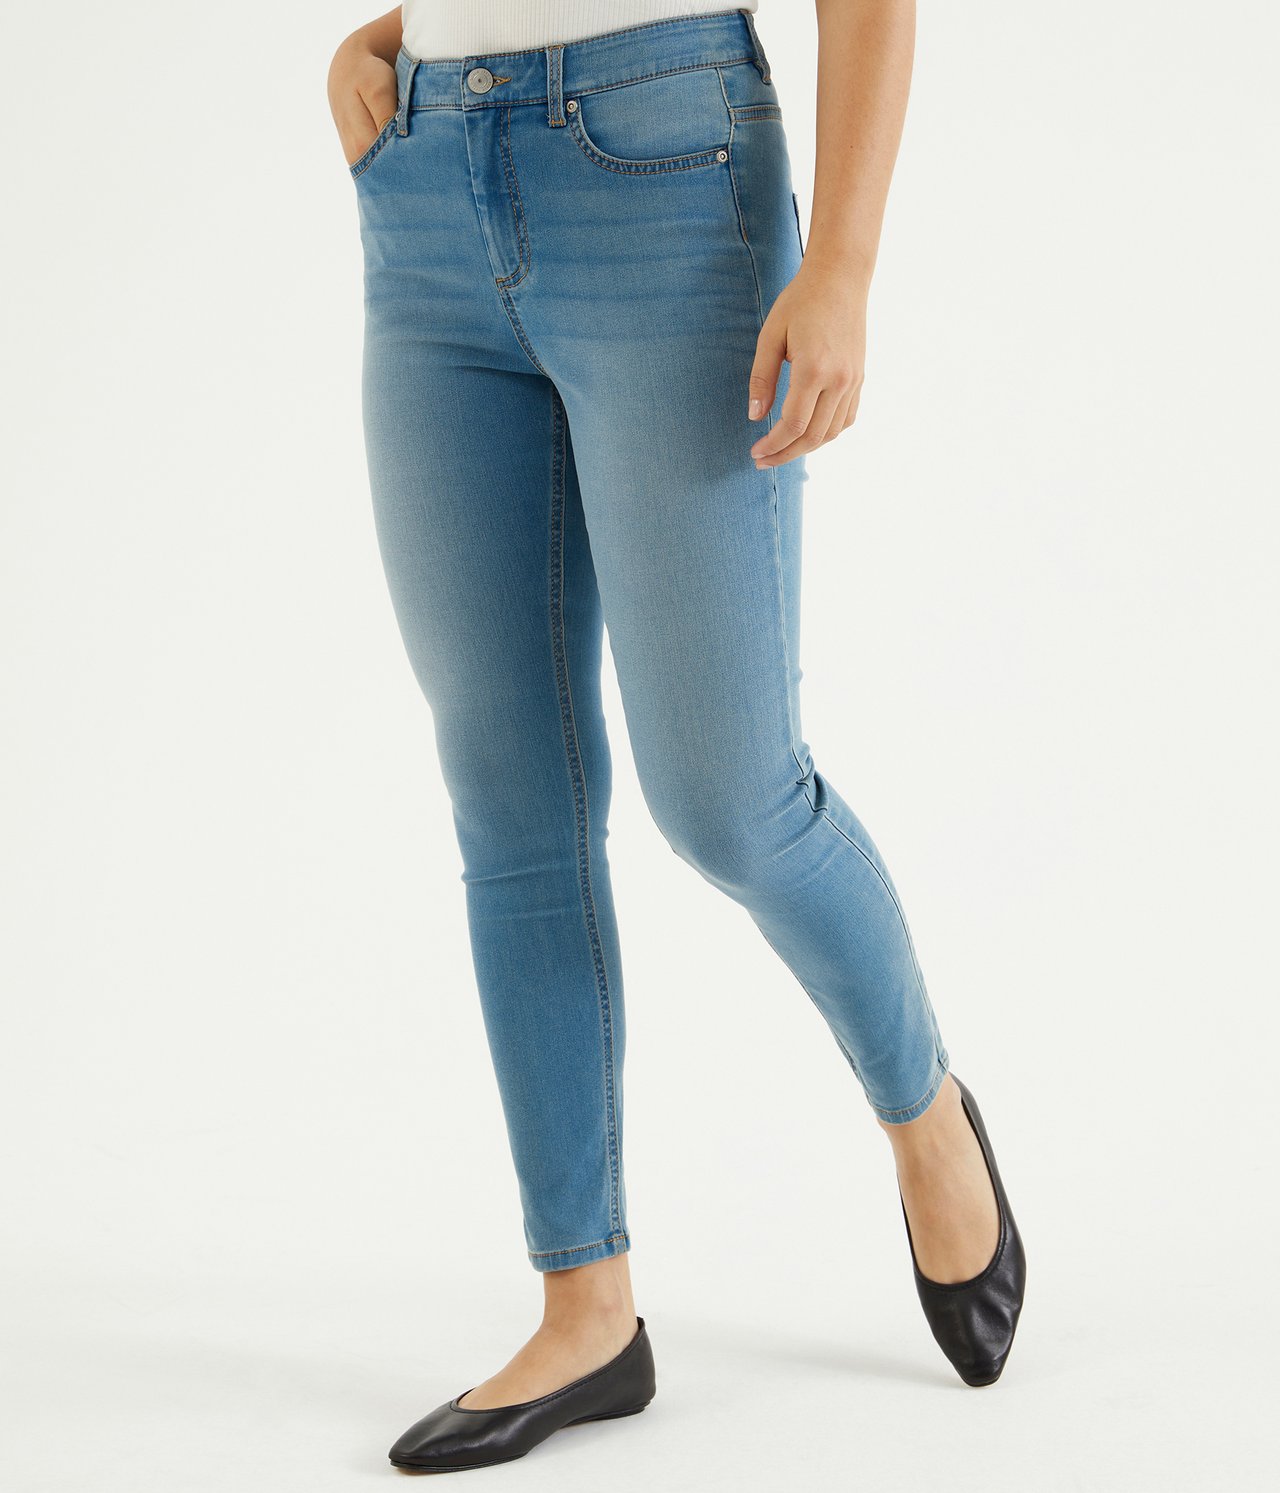 Super slim jeans short leg - Denim - 2